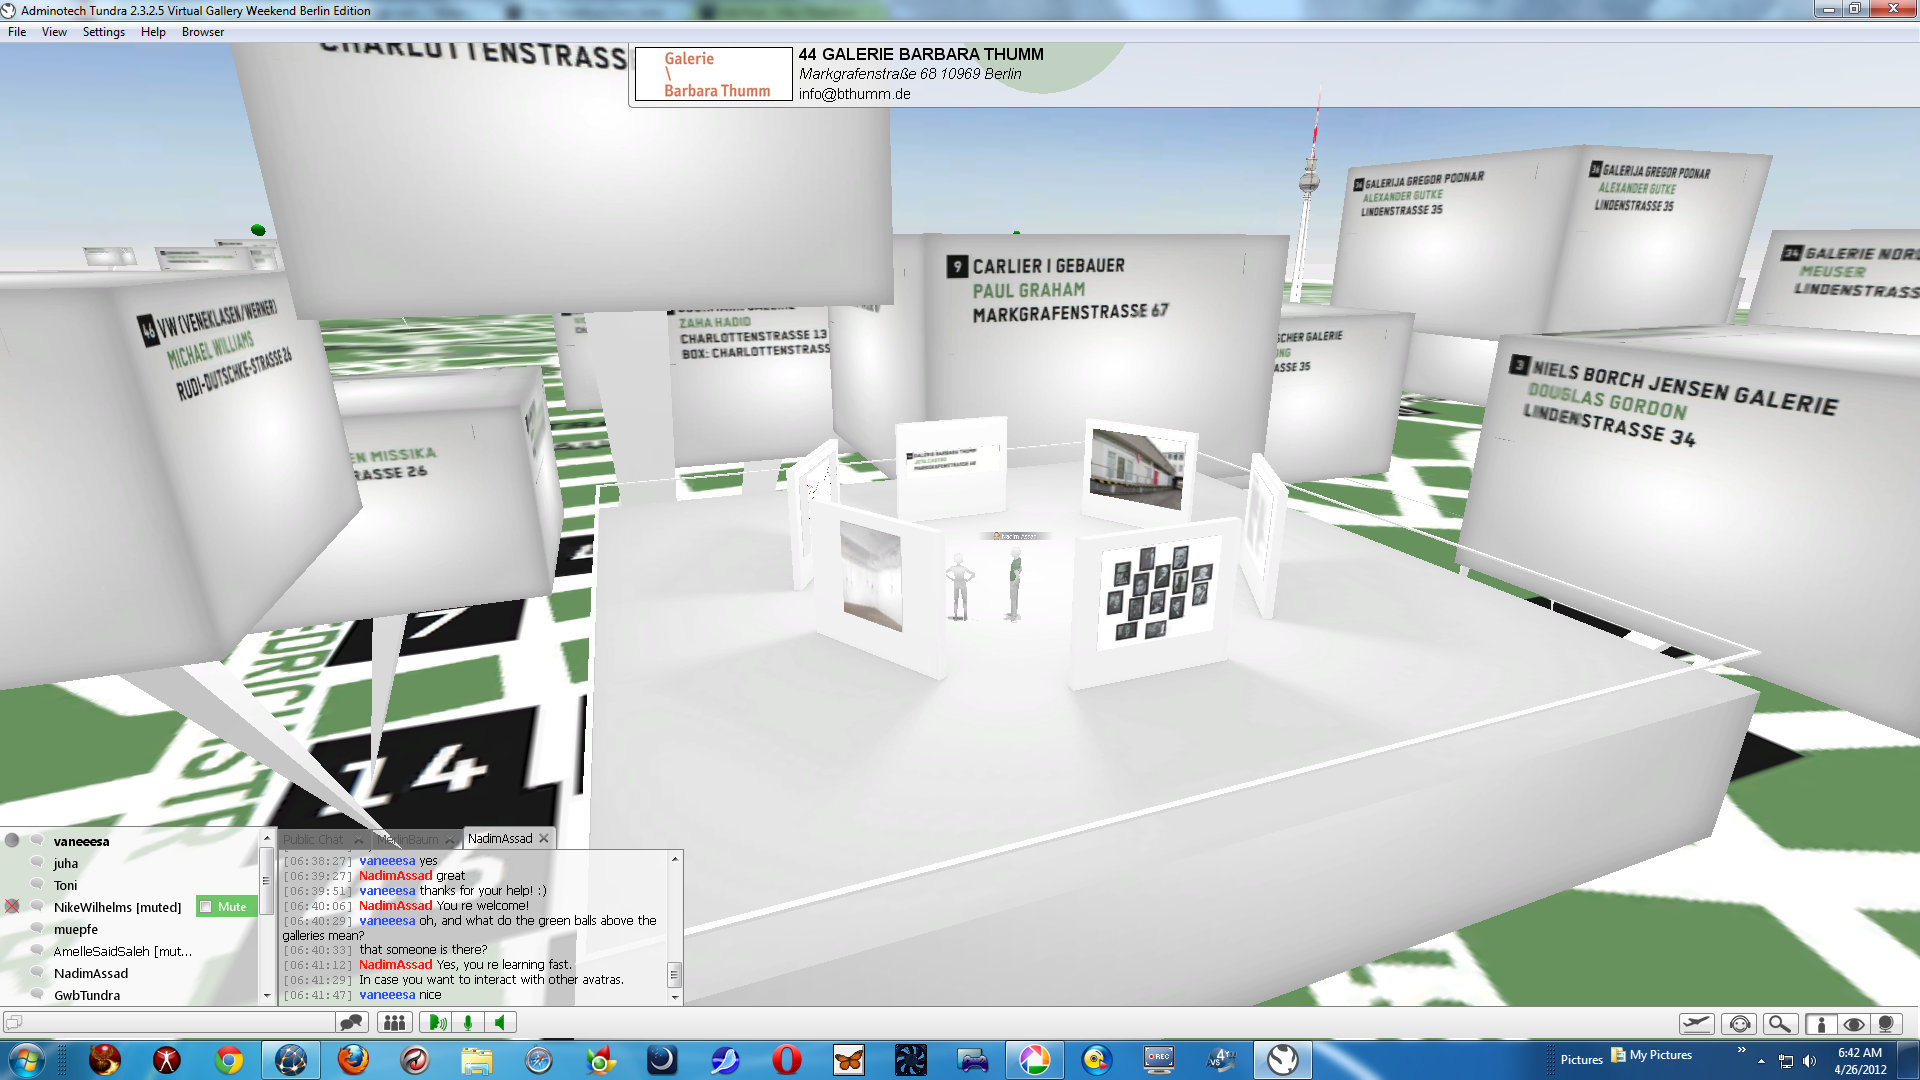 screenshot from the virtual world "Virtual Gallery Weekend Berlin"